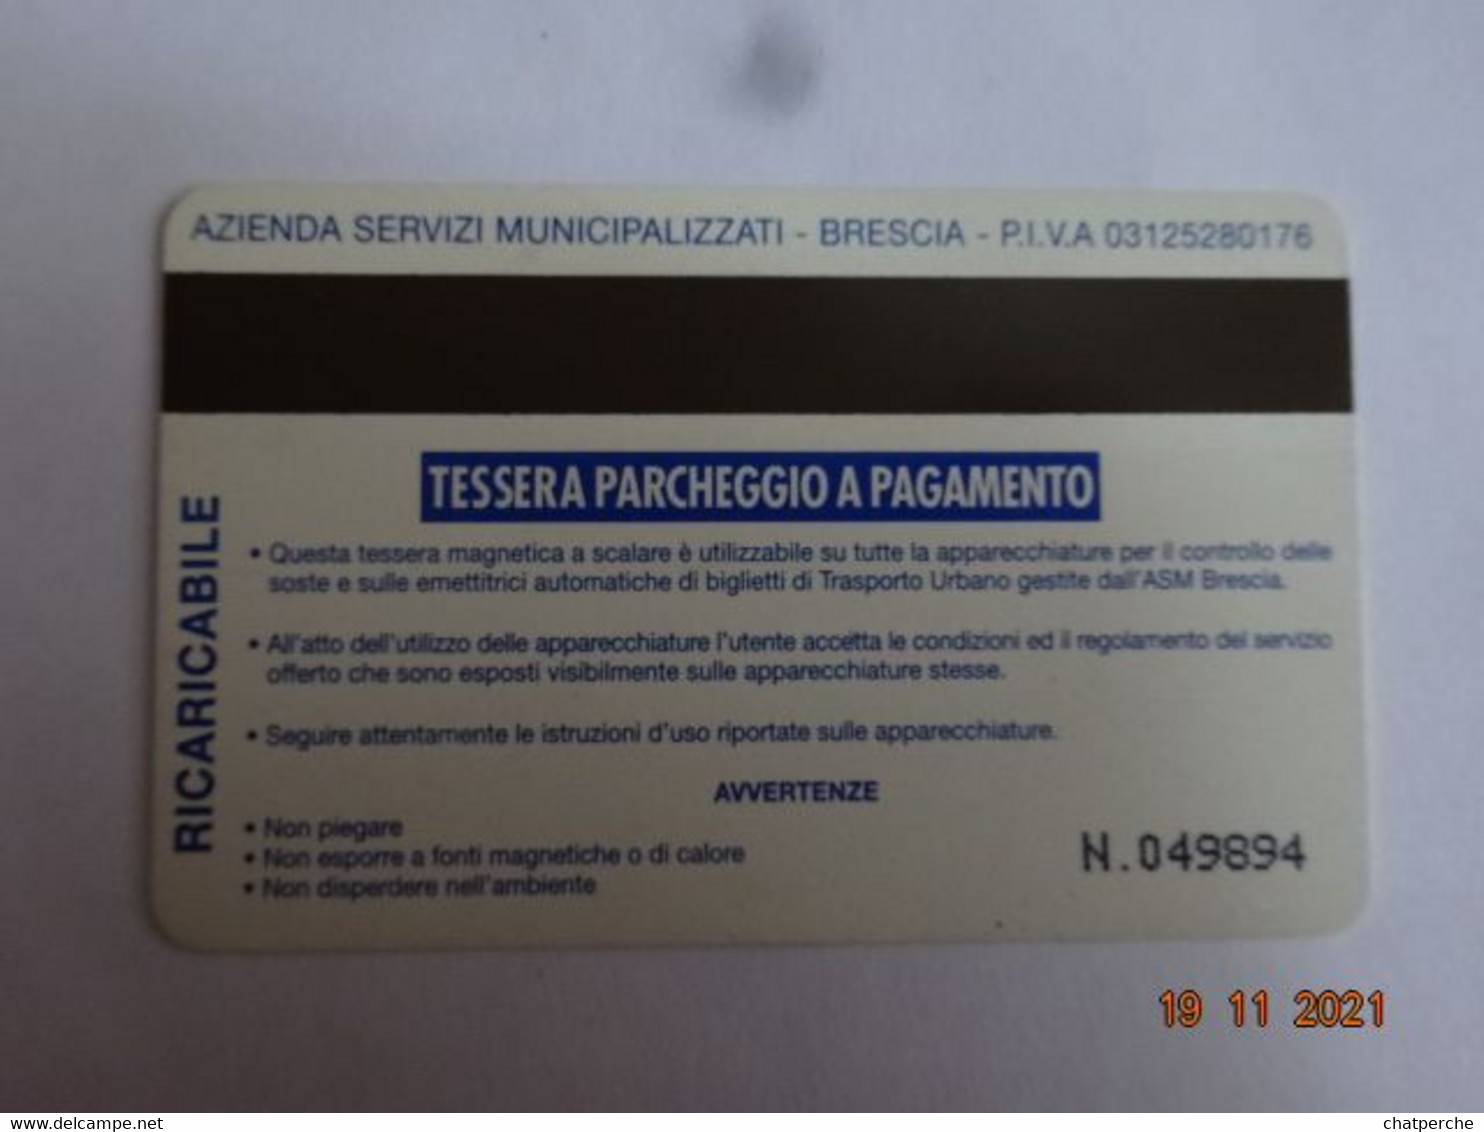 ITALIE ITALIA CARTE STATIONNEMENT BANDE MAGNÉTIQUE PARKIBG CARD BRESCIA - Collections